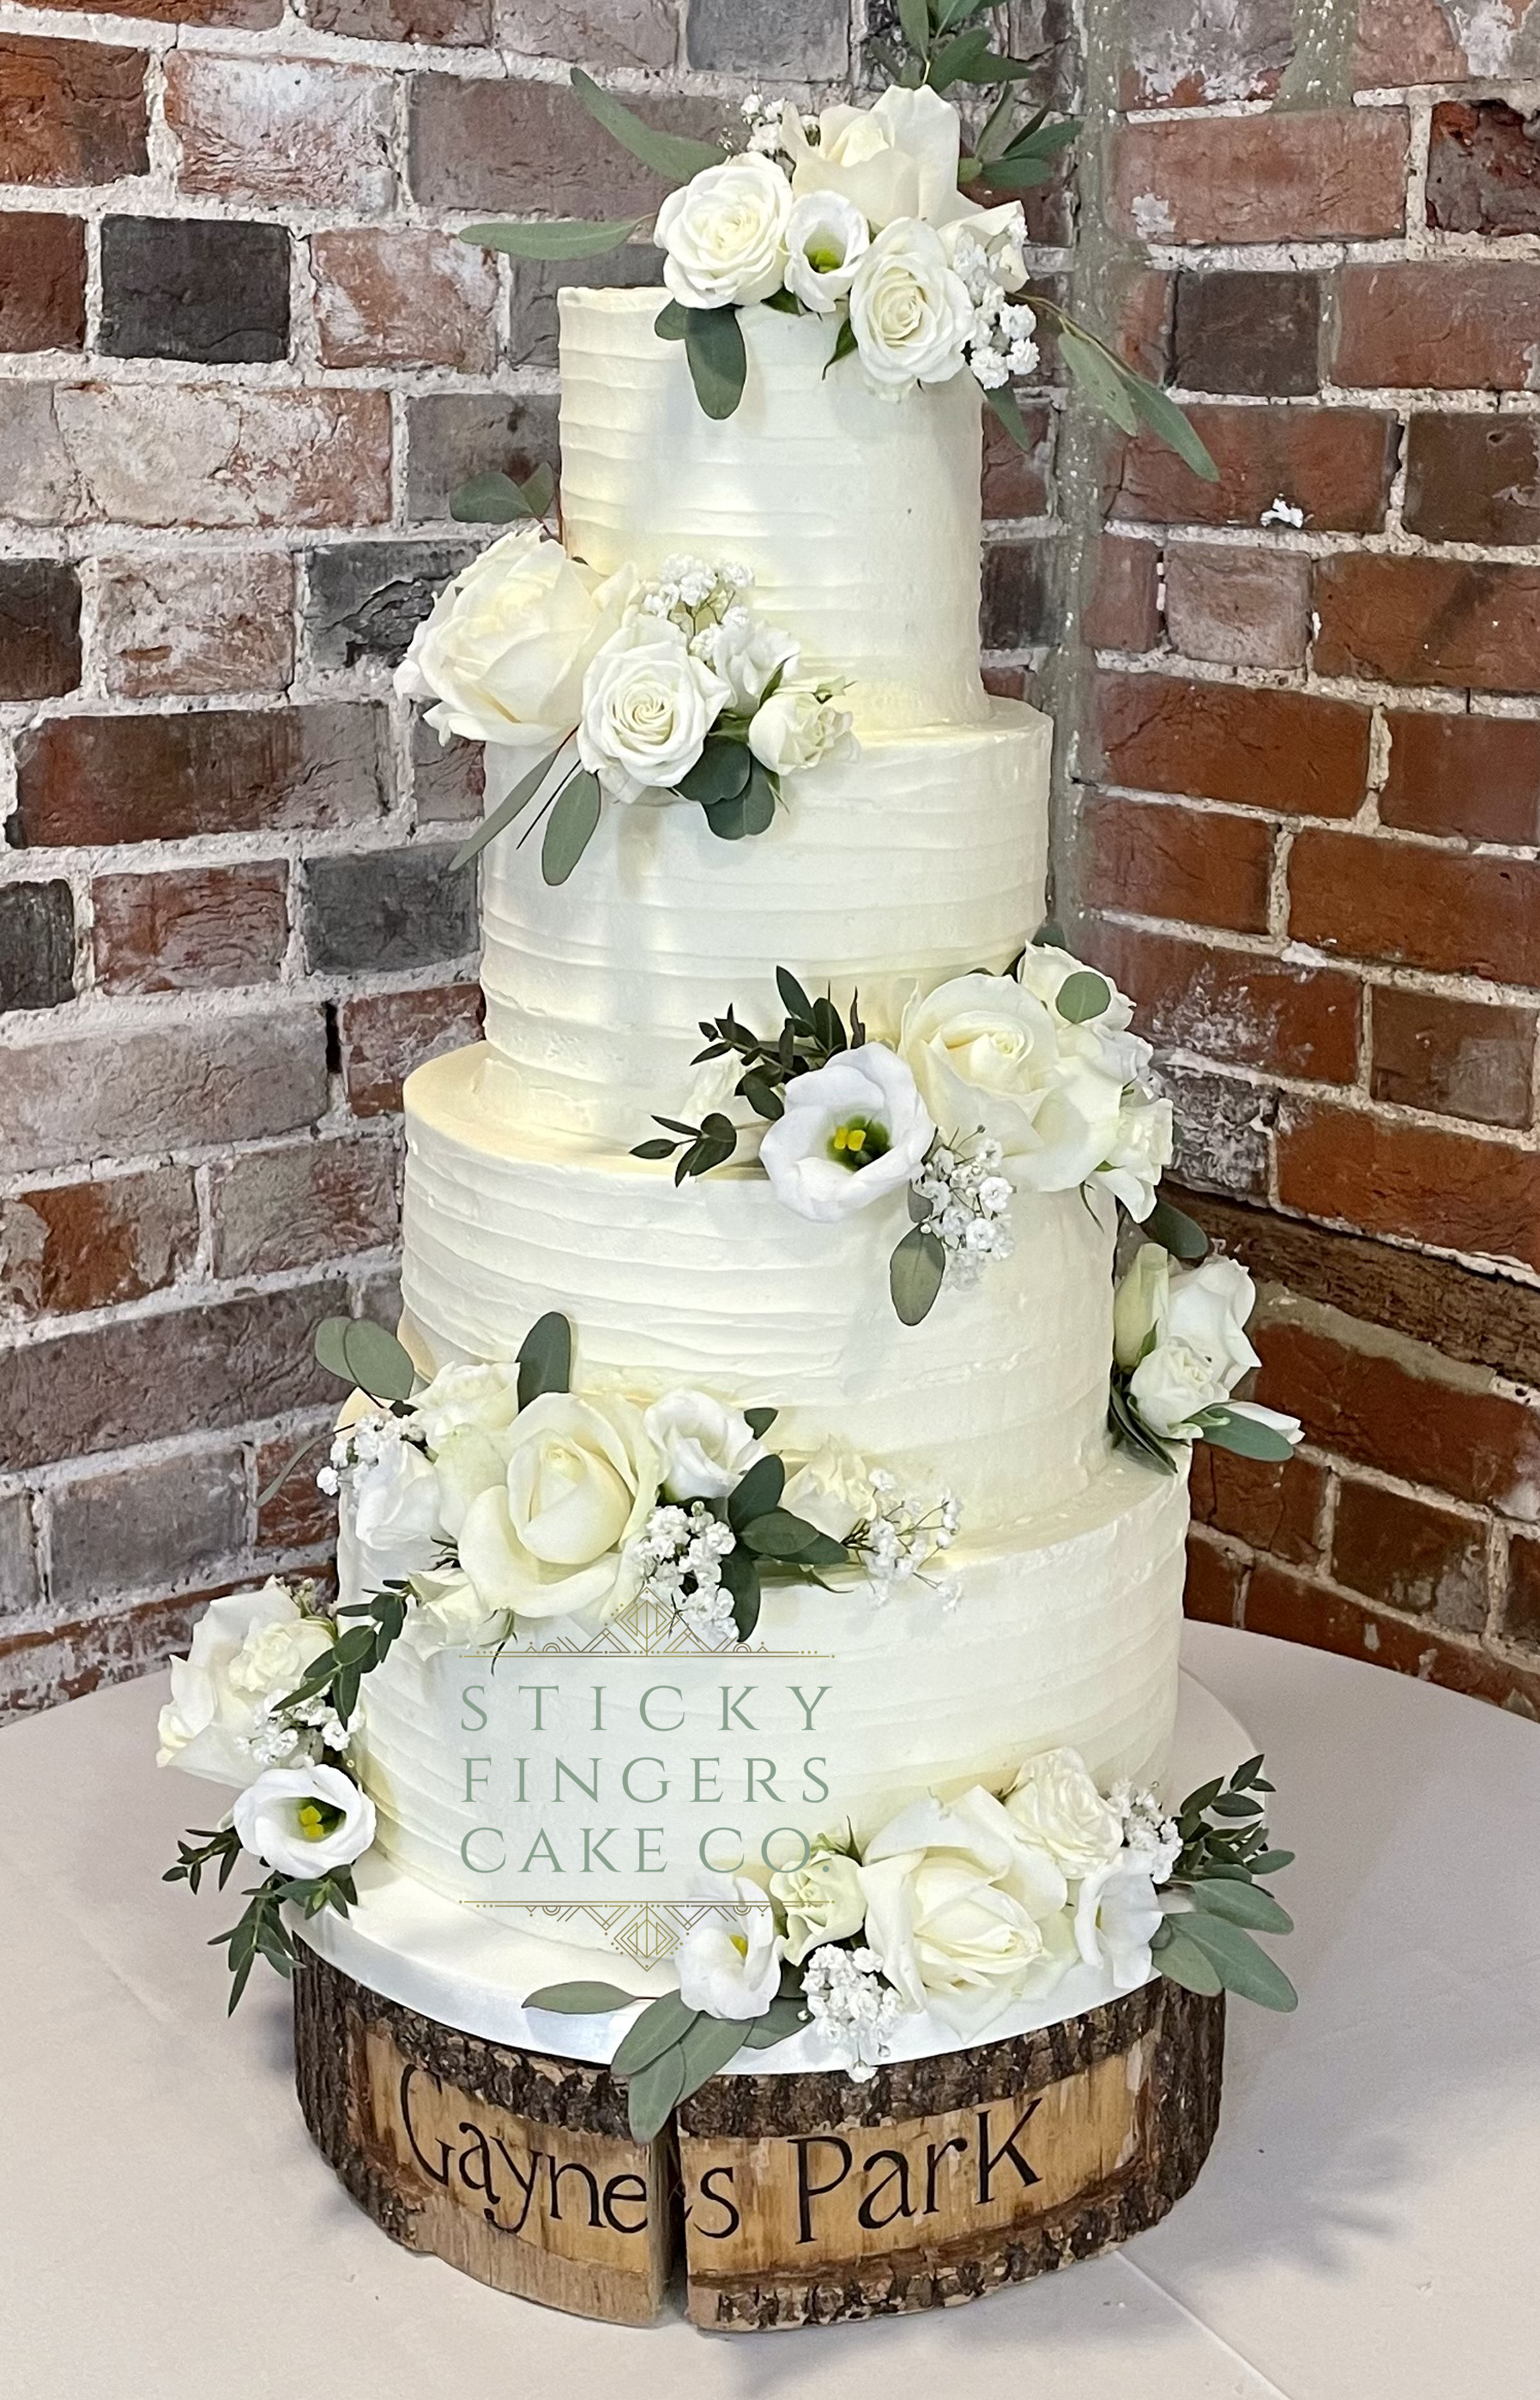 4-tier Buttercream Wedding Cake displayed at Gaynes Park, Epping